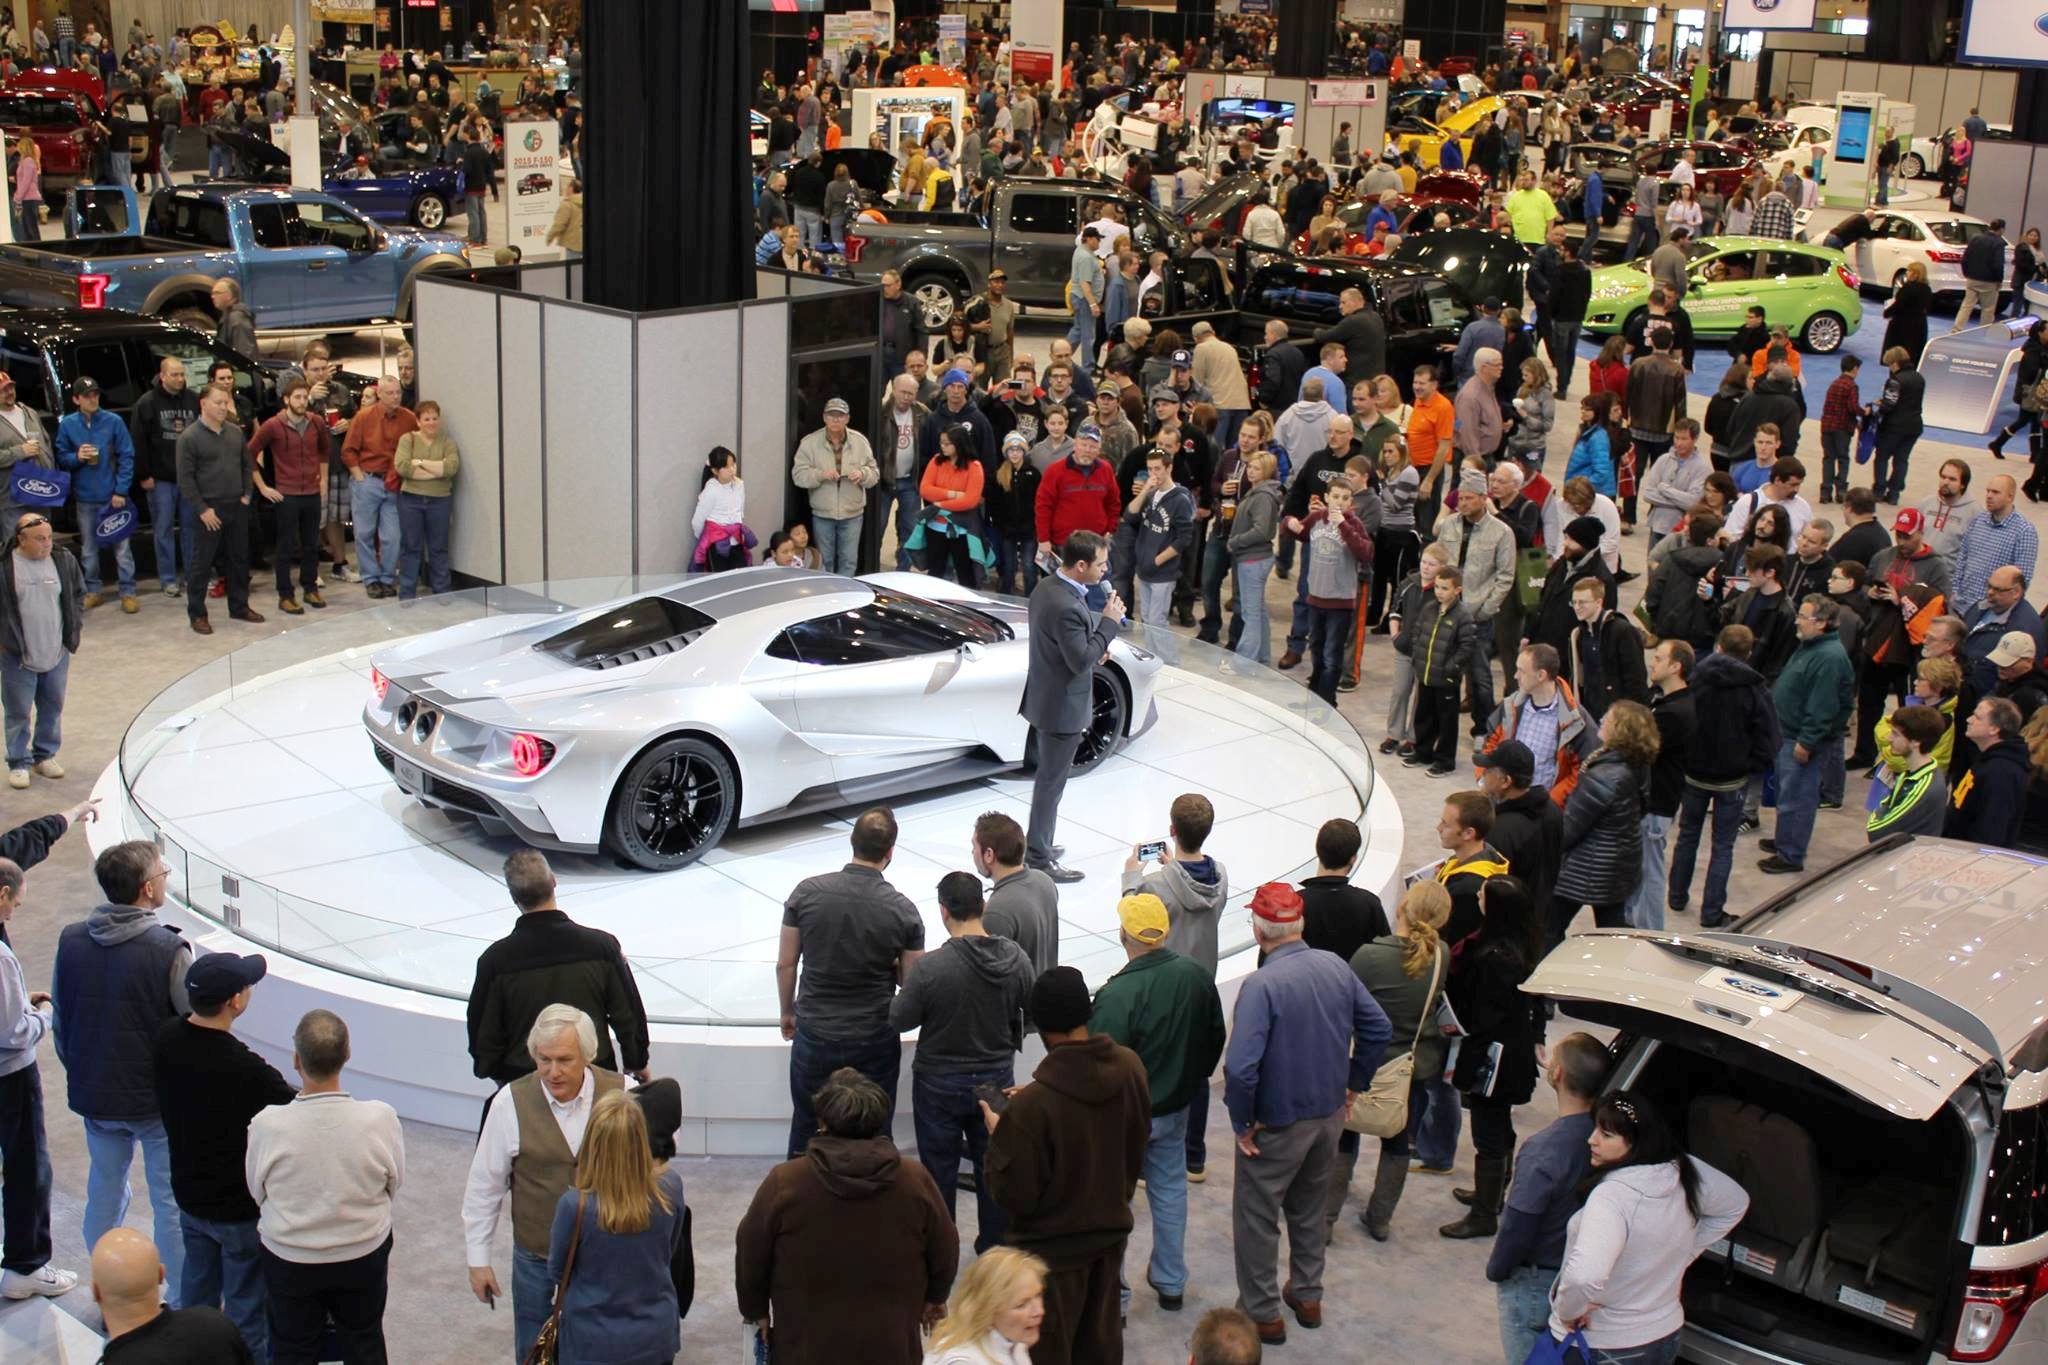 Cleveland Auto Show Brings the Automotive World to Cleveland’s IX